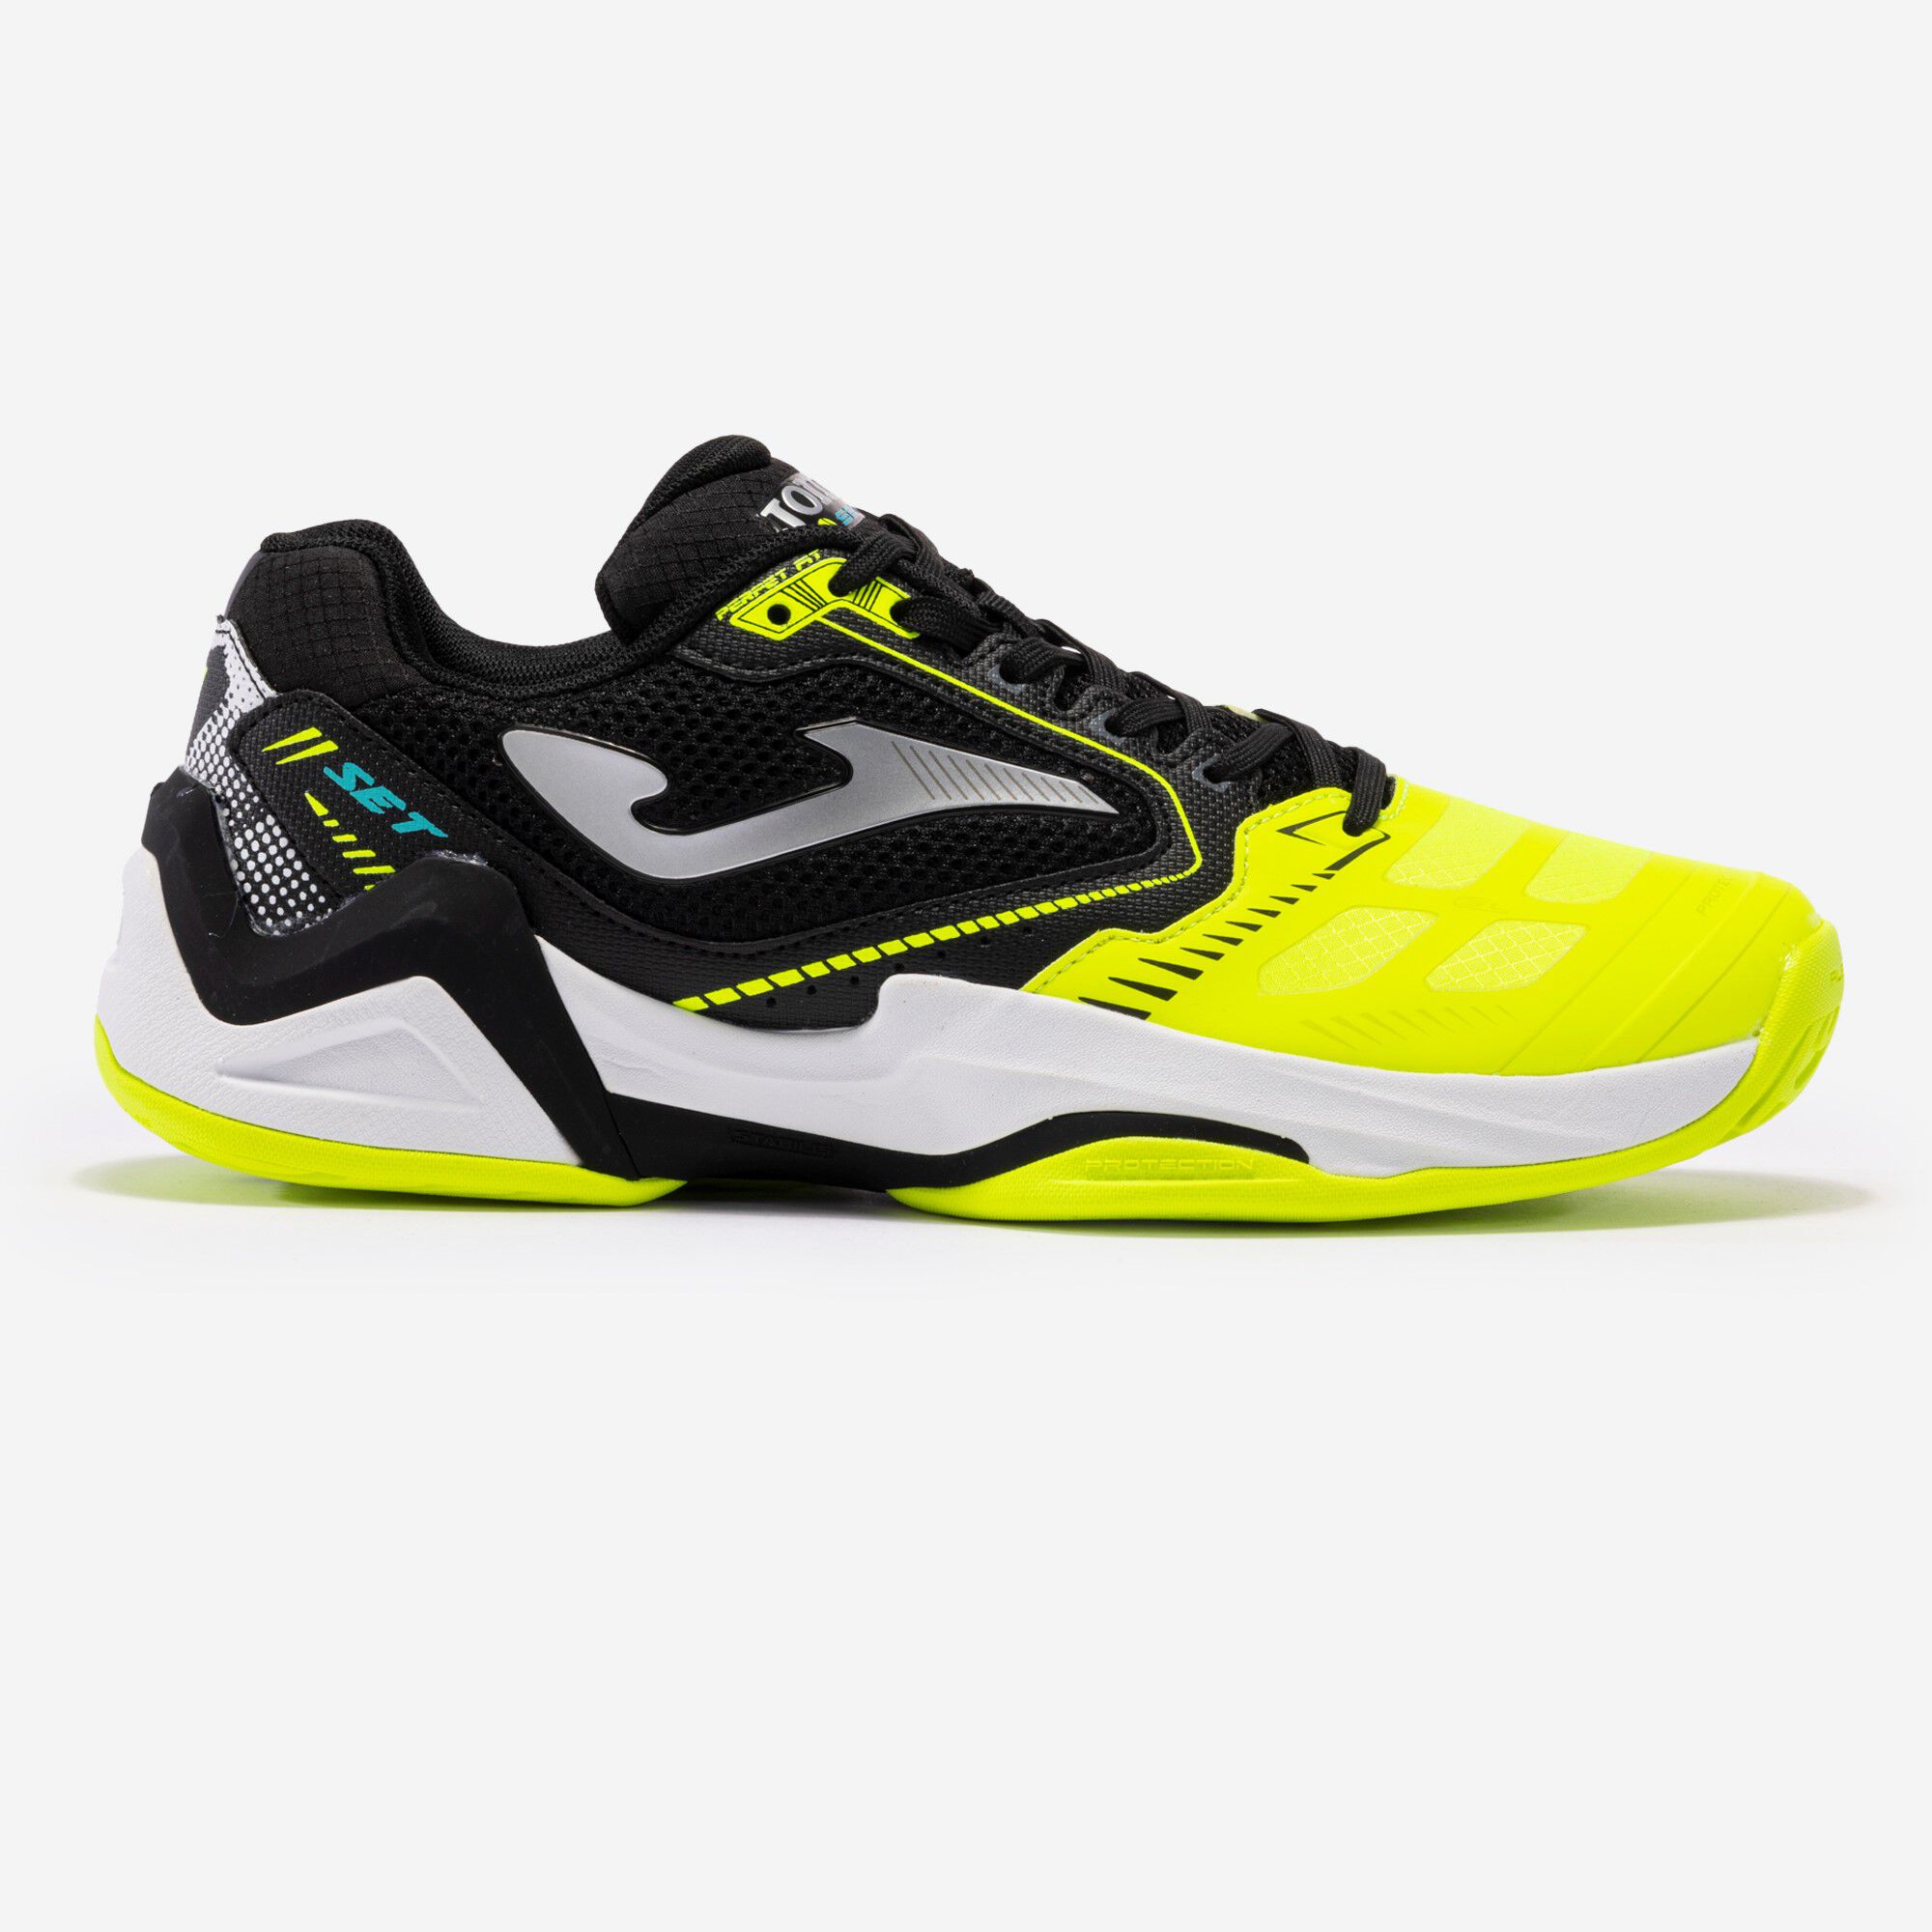 Shoes T.Set 23 hard court man black fluorescent yellow